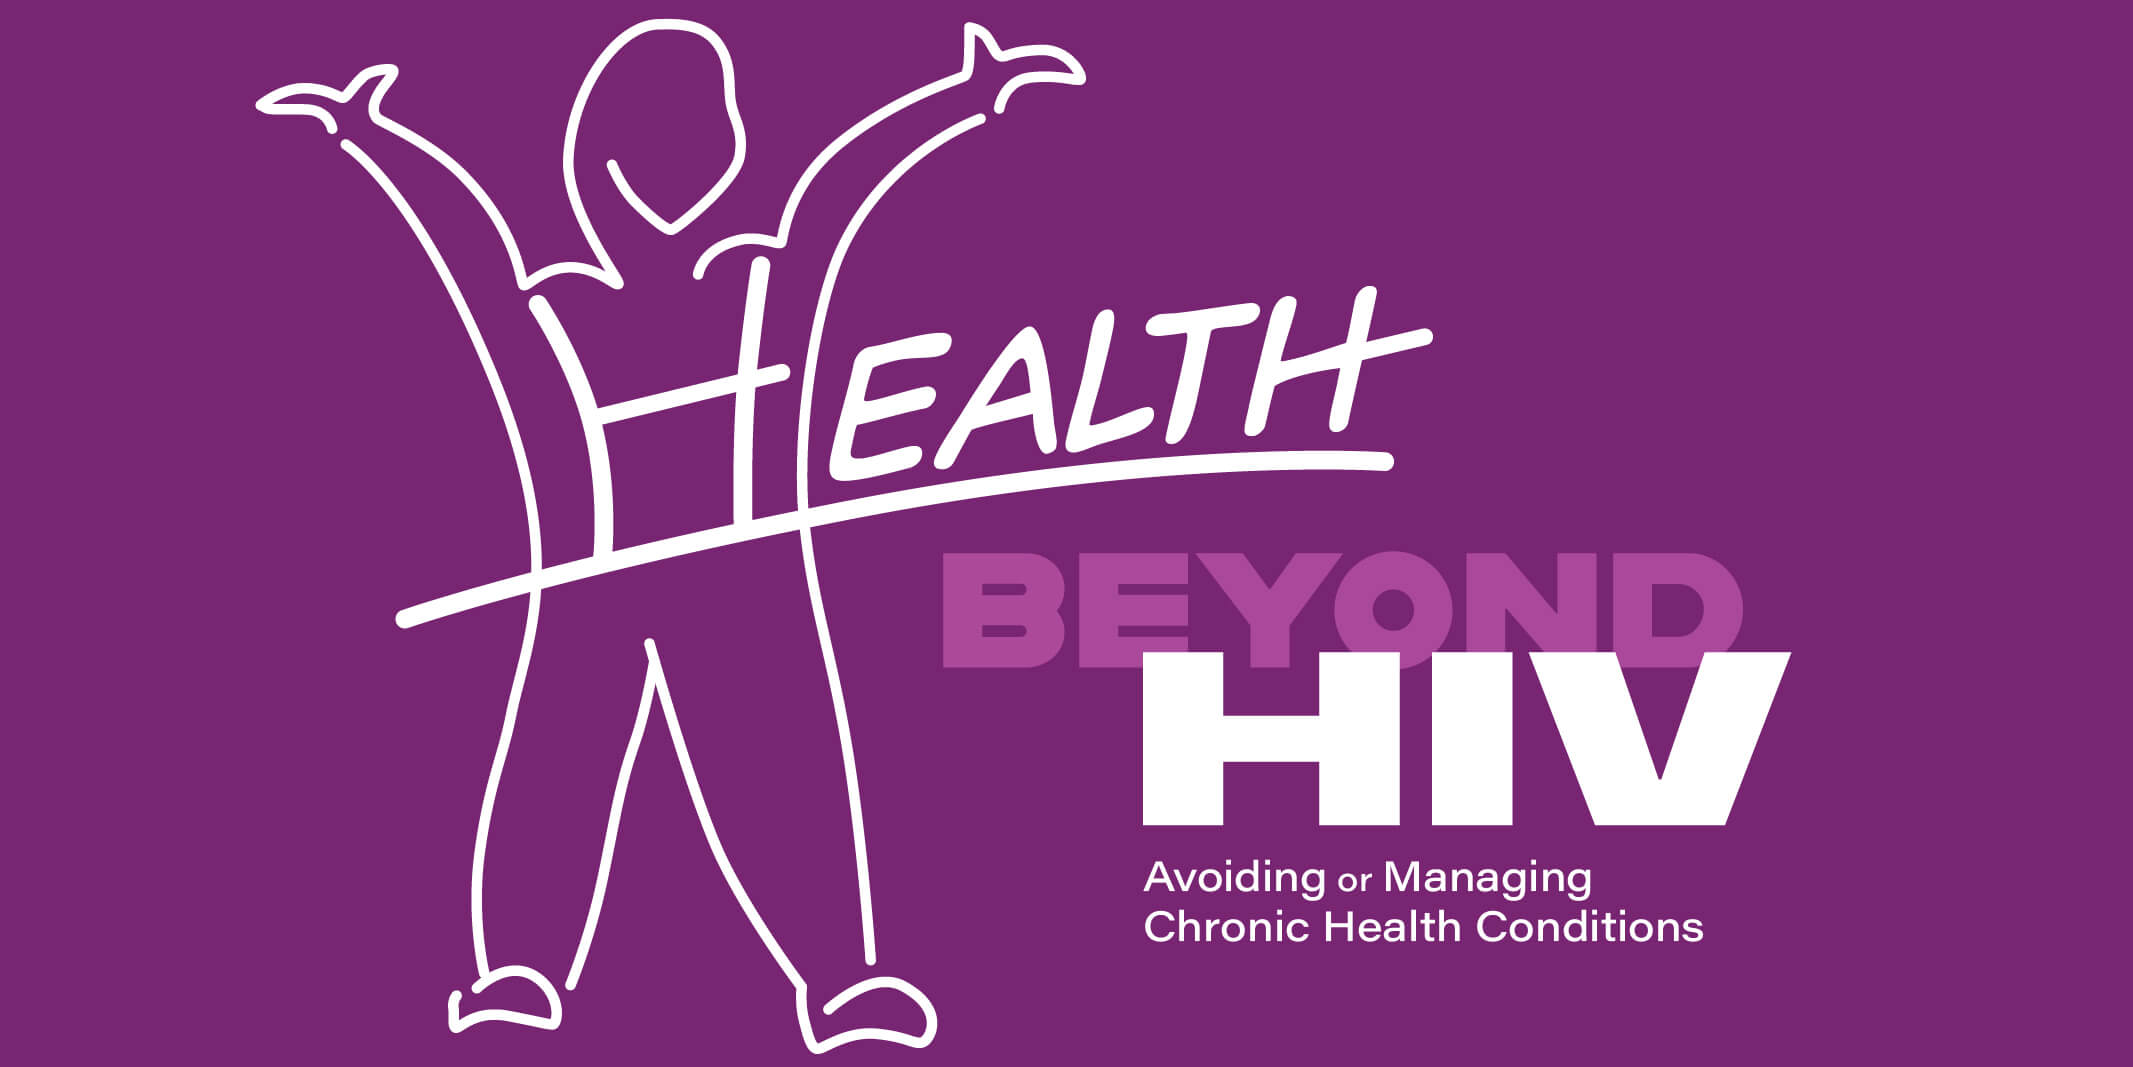 Health Beyond HIV Graphic